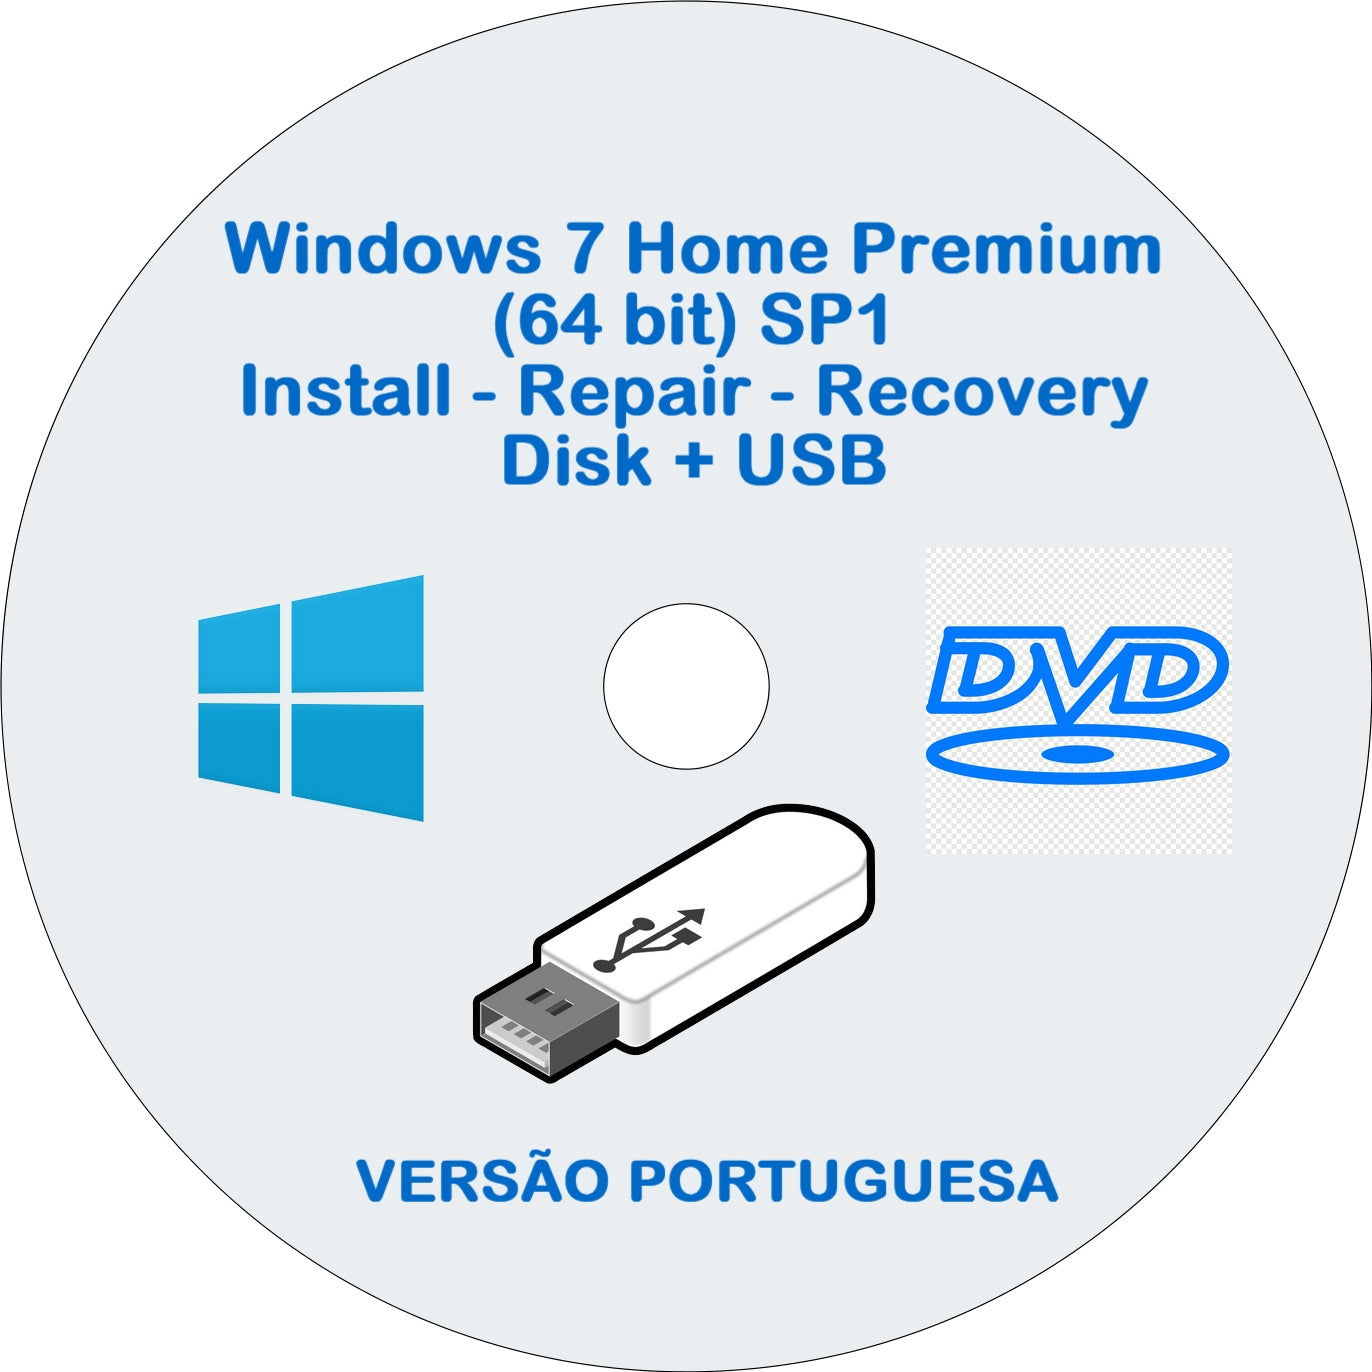 Windows 7 Home Premium Disk + USB 64 Bit